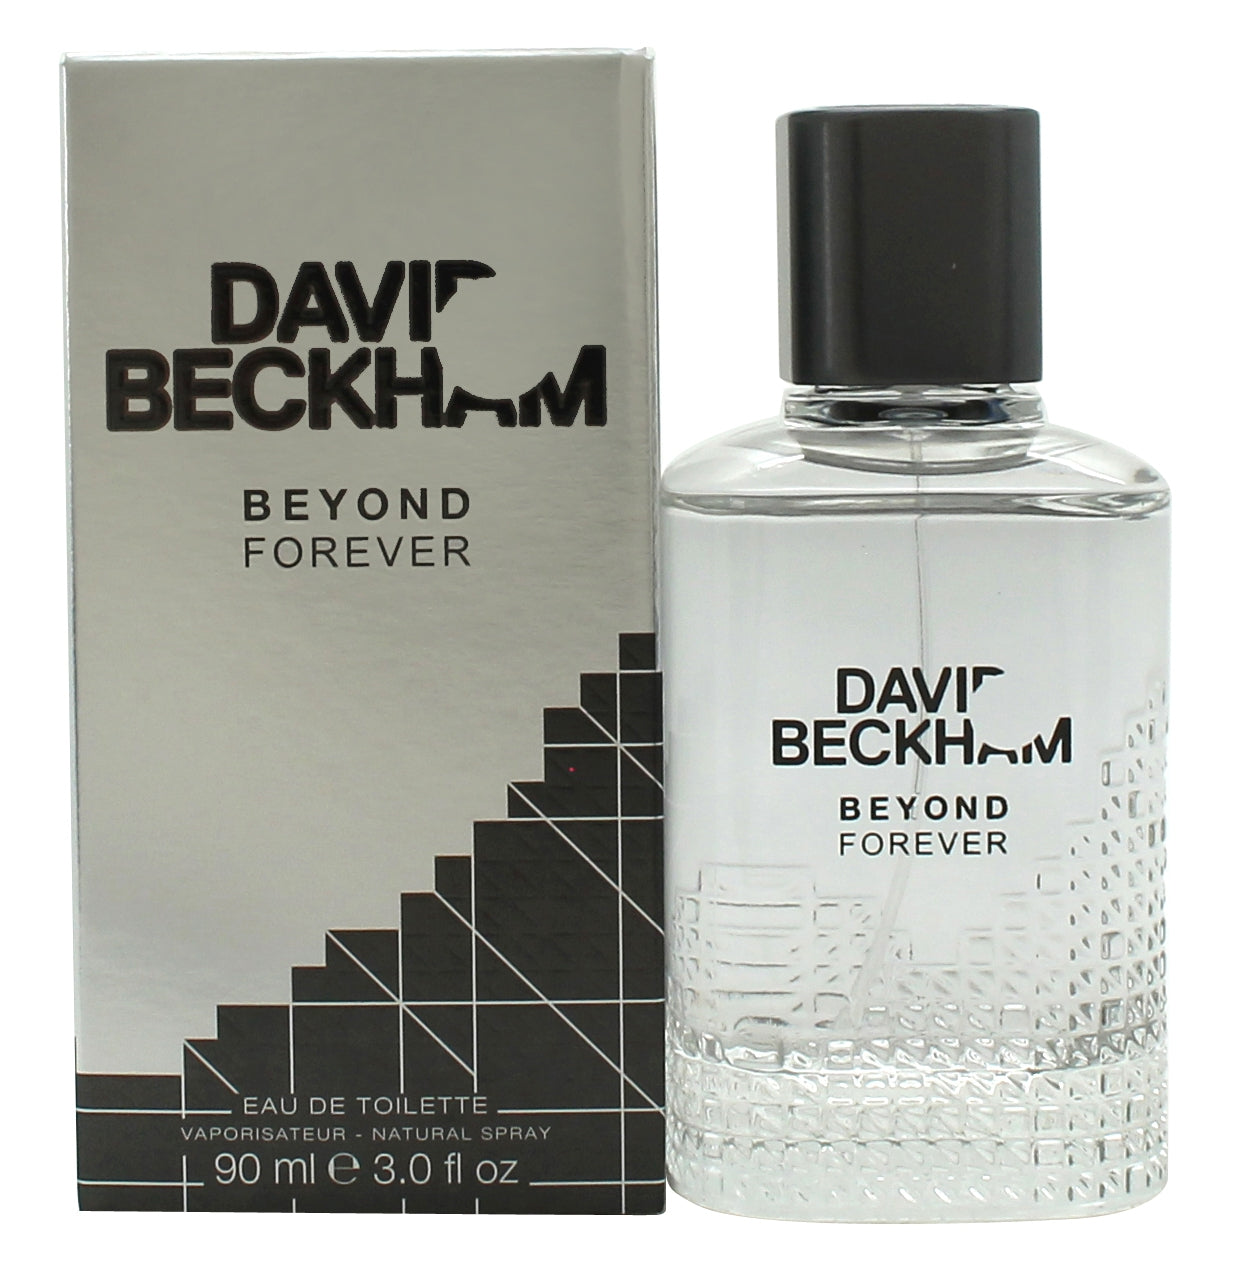 View David Beckham Beyond Forever Eau de Toilette 90ml Spray information